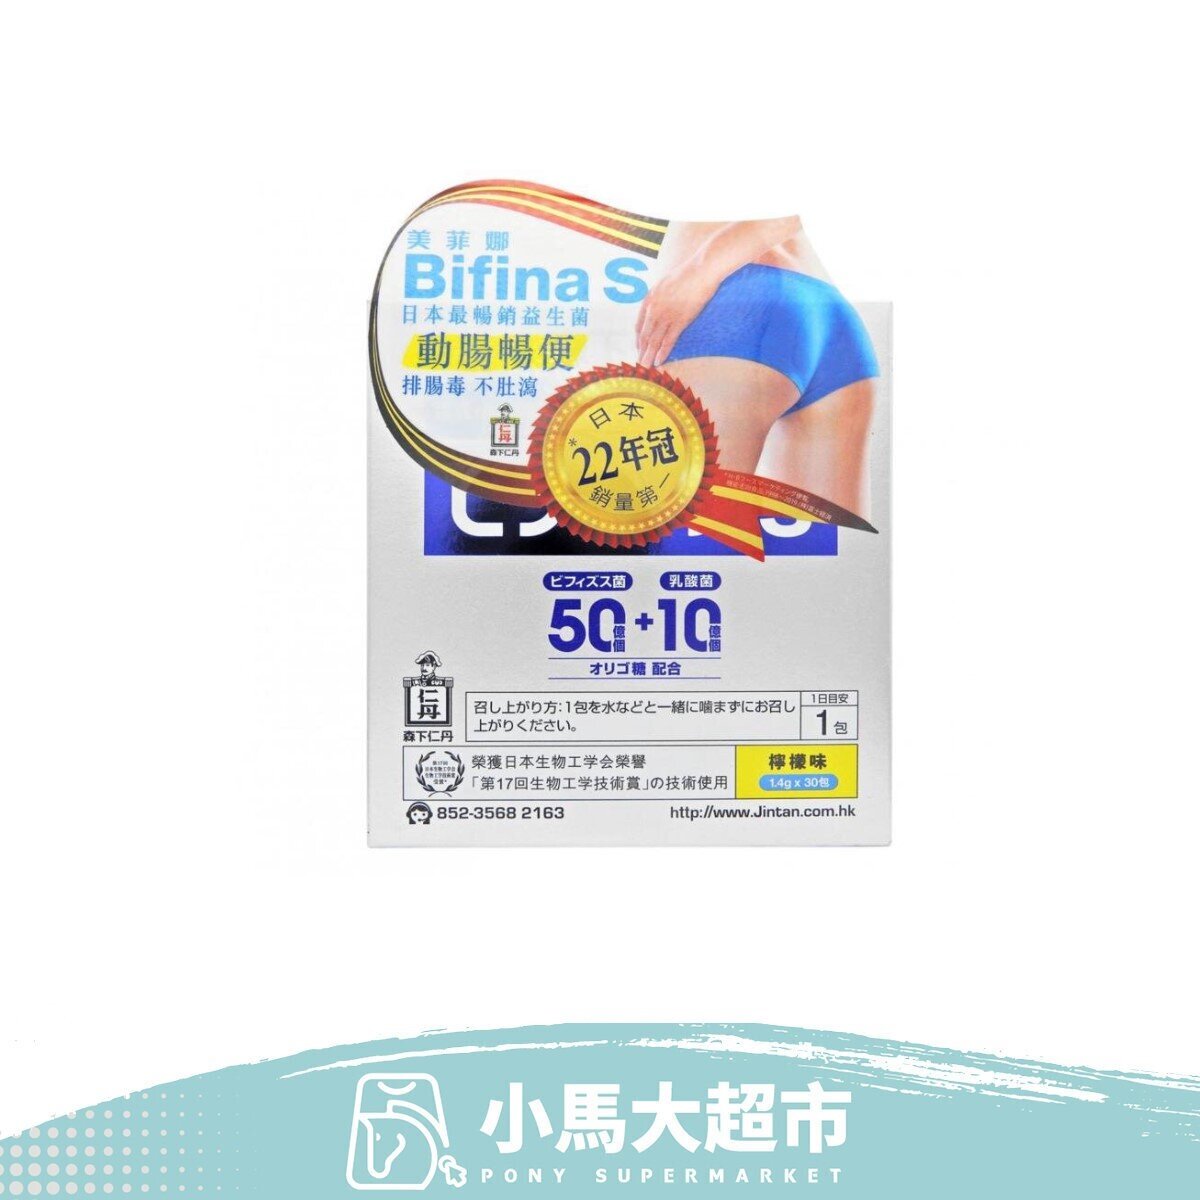 Bifina S(美菲娜)晶球益生菌 30包(1盒) exp:3/2025